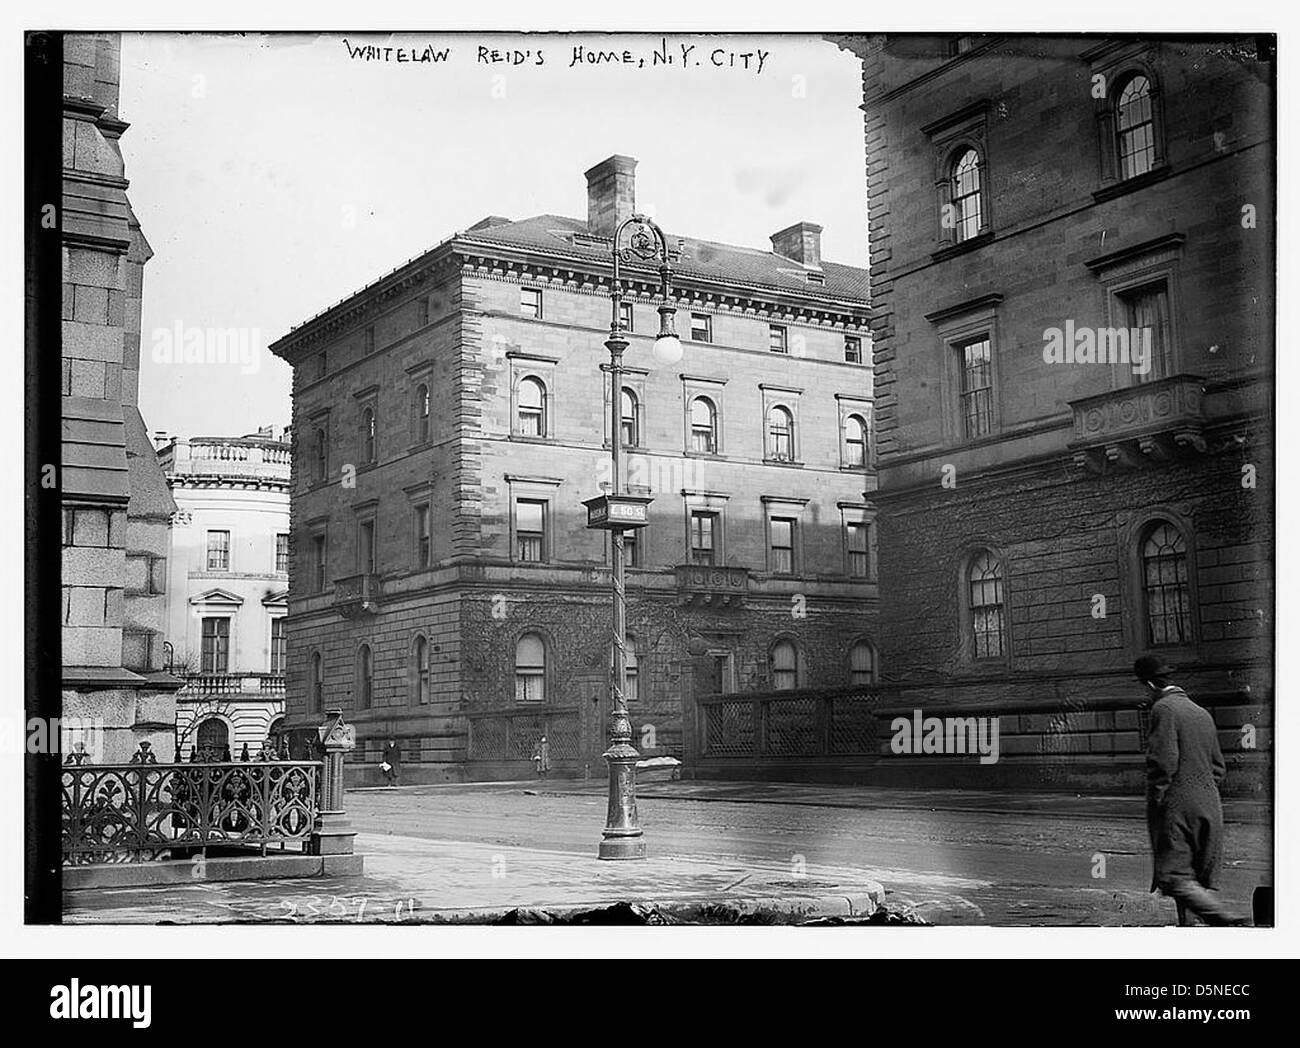 Whitelaw Reid's Home, N.Y.C. (LOC) Stock Photo